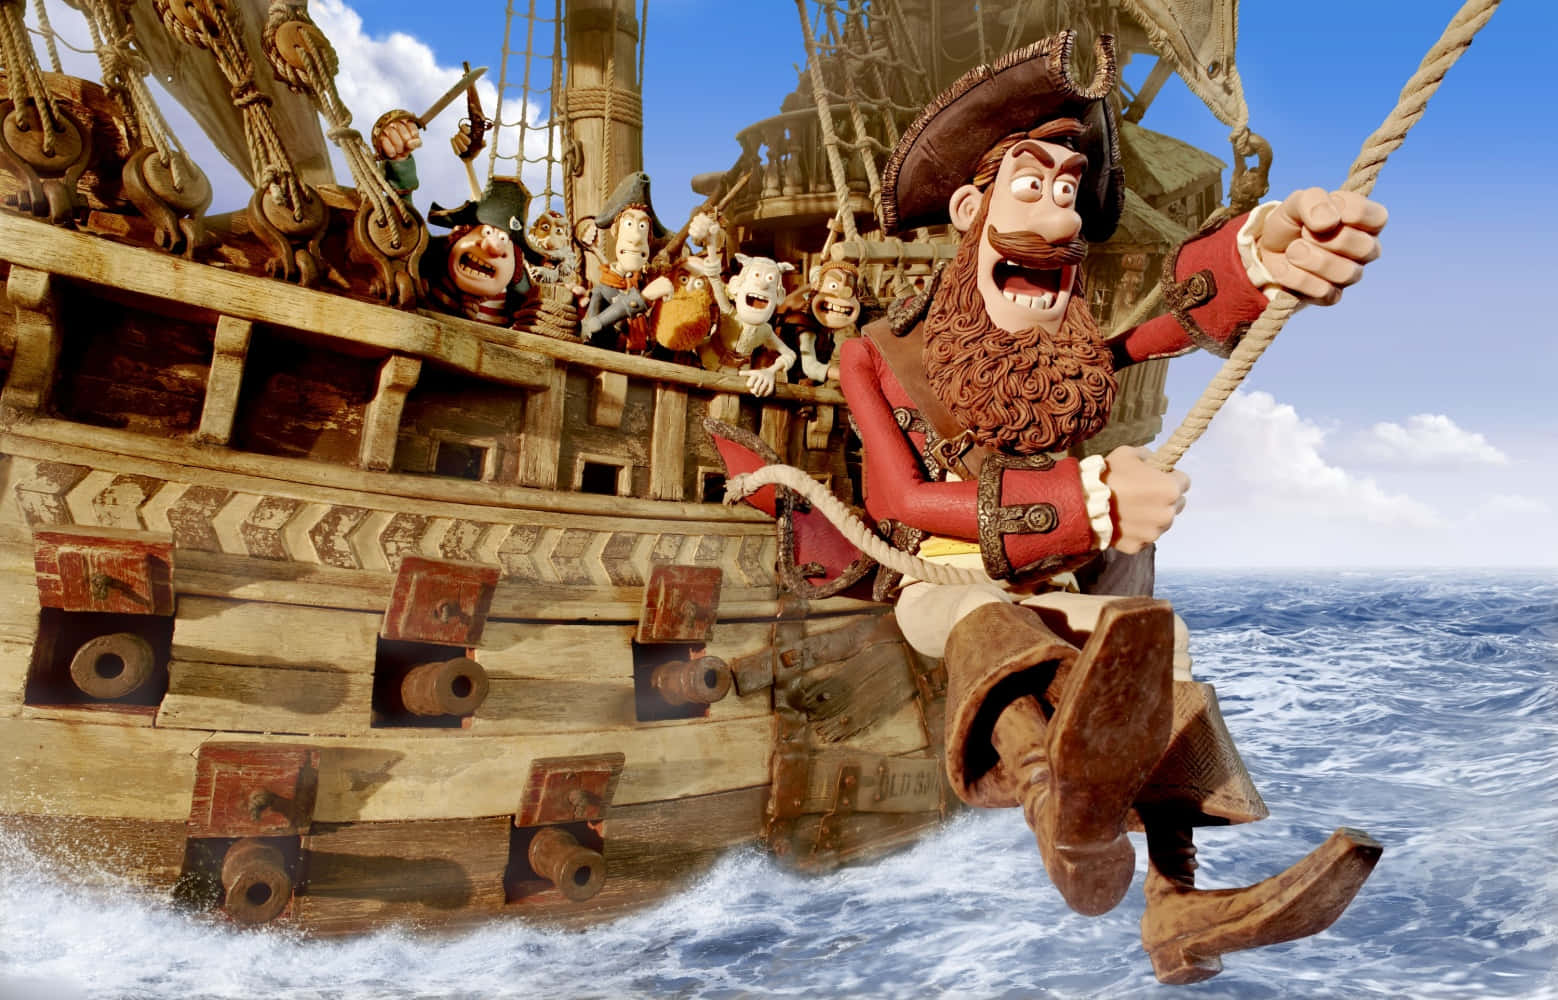 A Swashbuckling Pirate Prepares to Set Sail